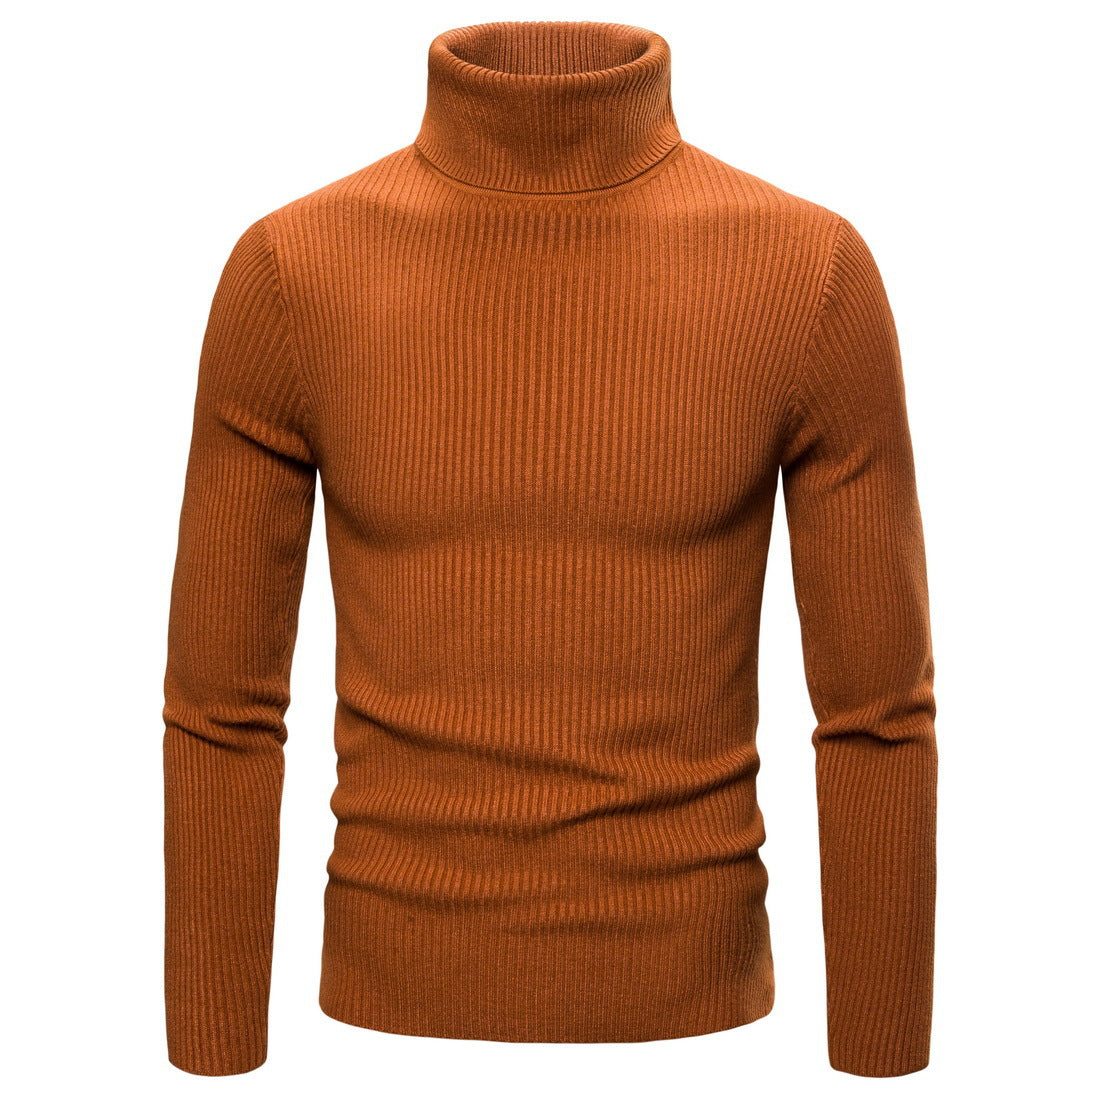 Pulover de toamna si iarna pentru barbati, din tricot delicat, cu guler inalt, pulover mulat pe corp, disponibil pe mai multe culori